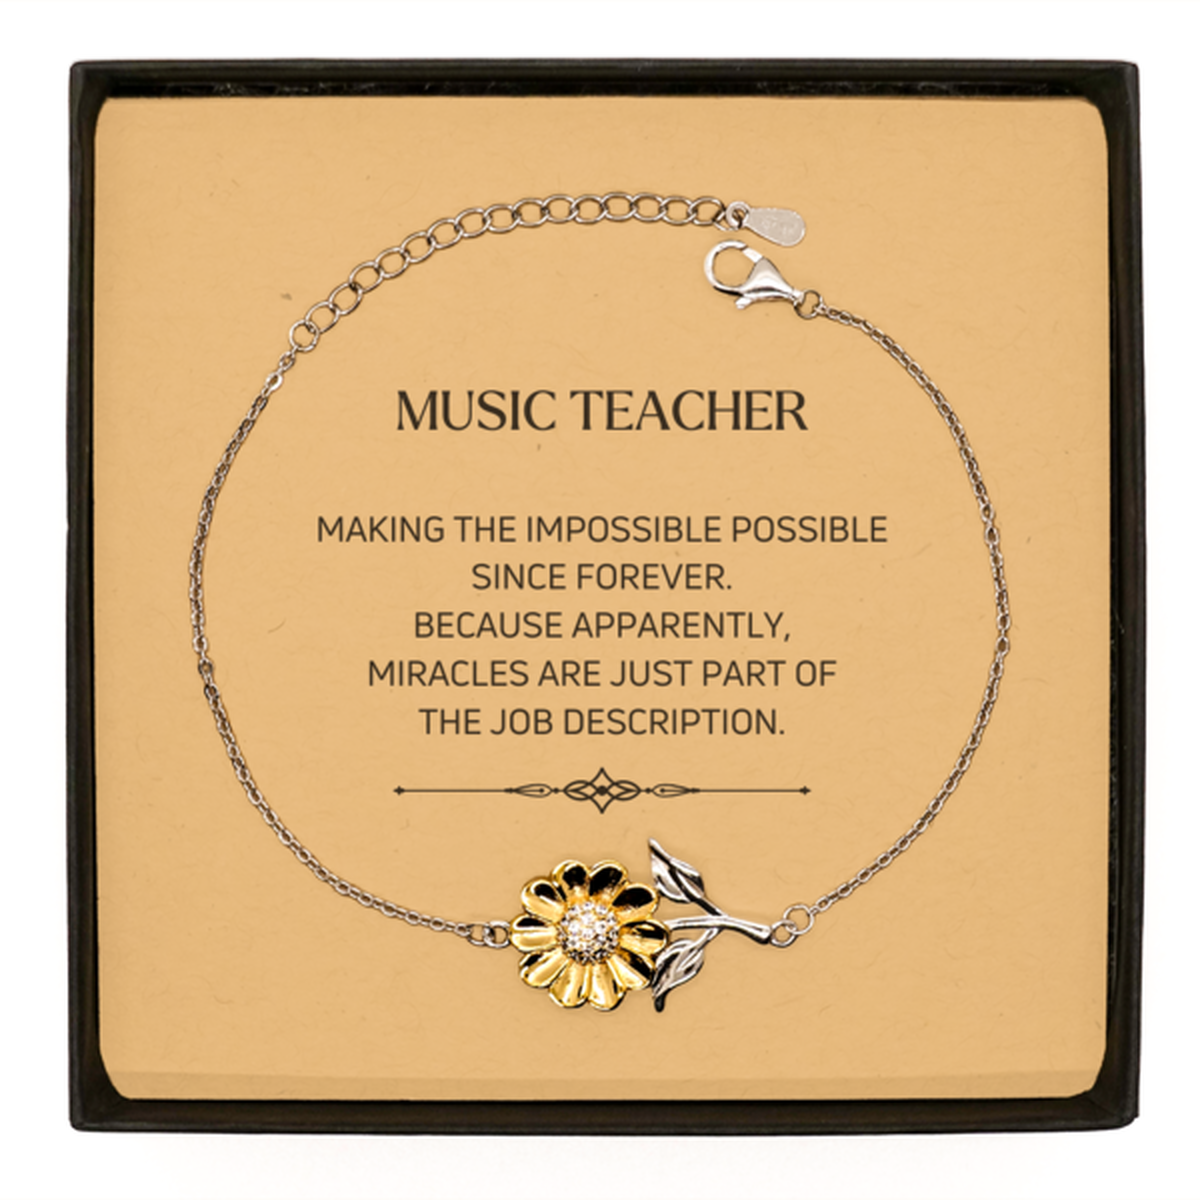 Funny Music Teacher Gifts, Miracles are just part of the job description, Inspirational Birthday Sunflower Bracelet For Music Teacher, Men, Women, Coworkers, Friends, Boss